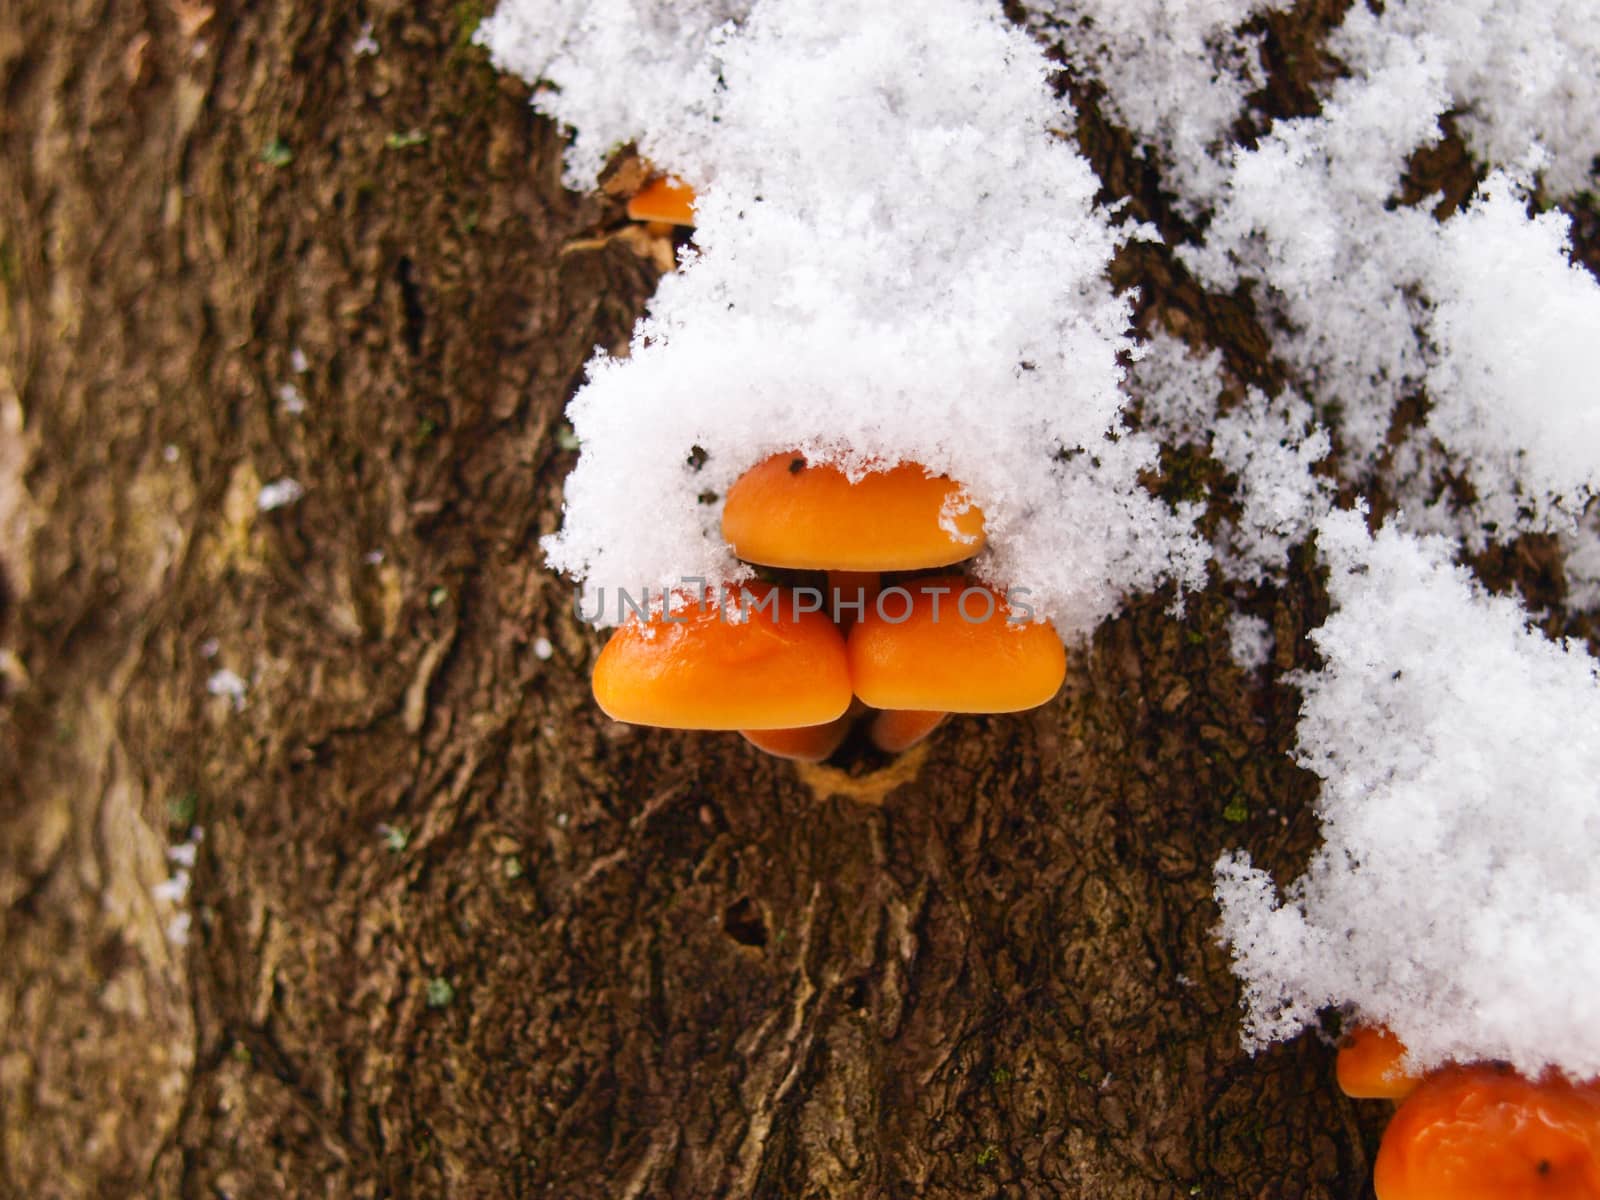 Snowy enokitake mushroom in forest. by GraffiTimi